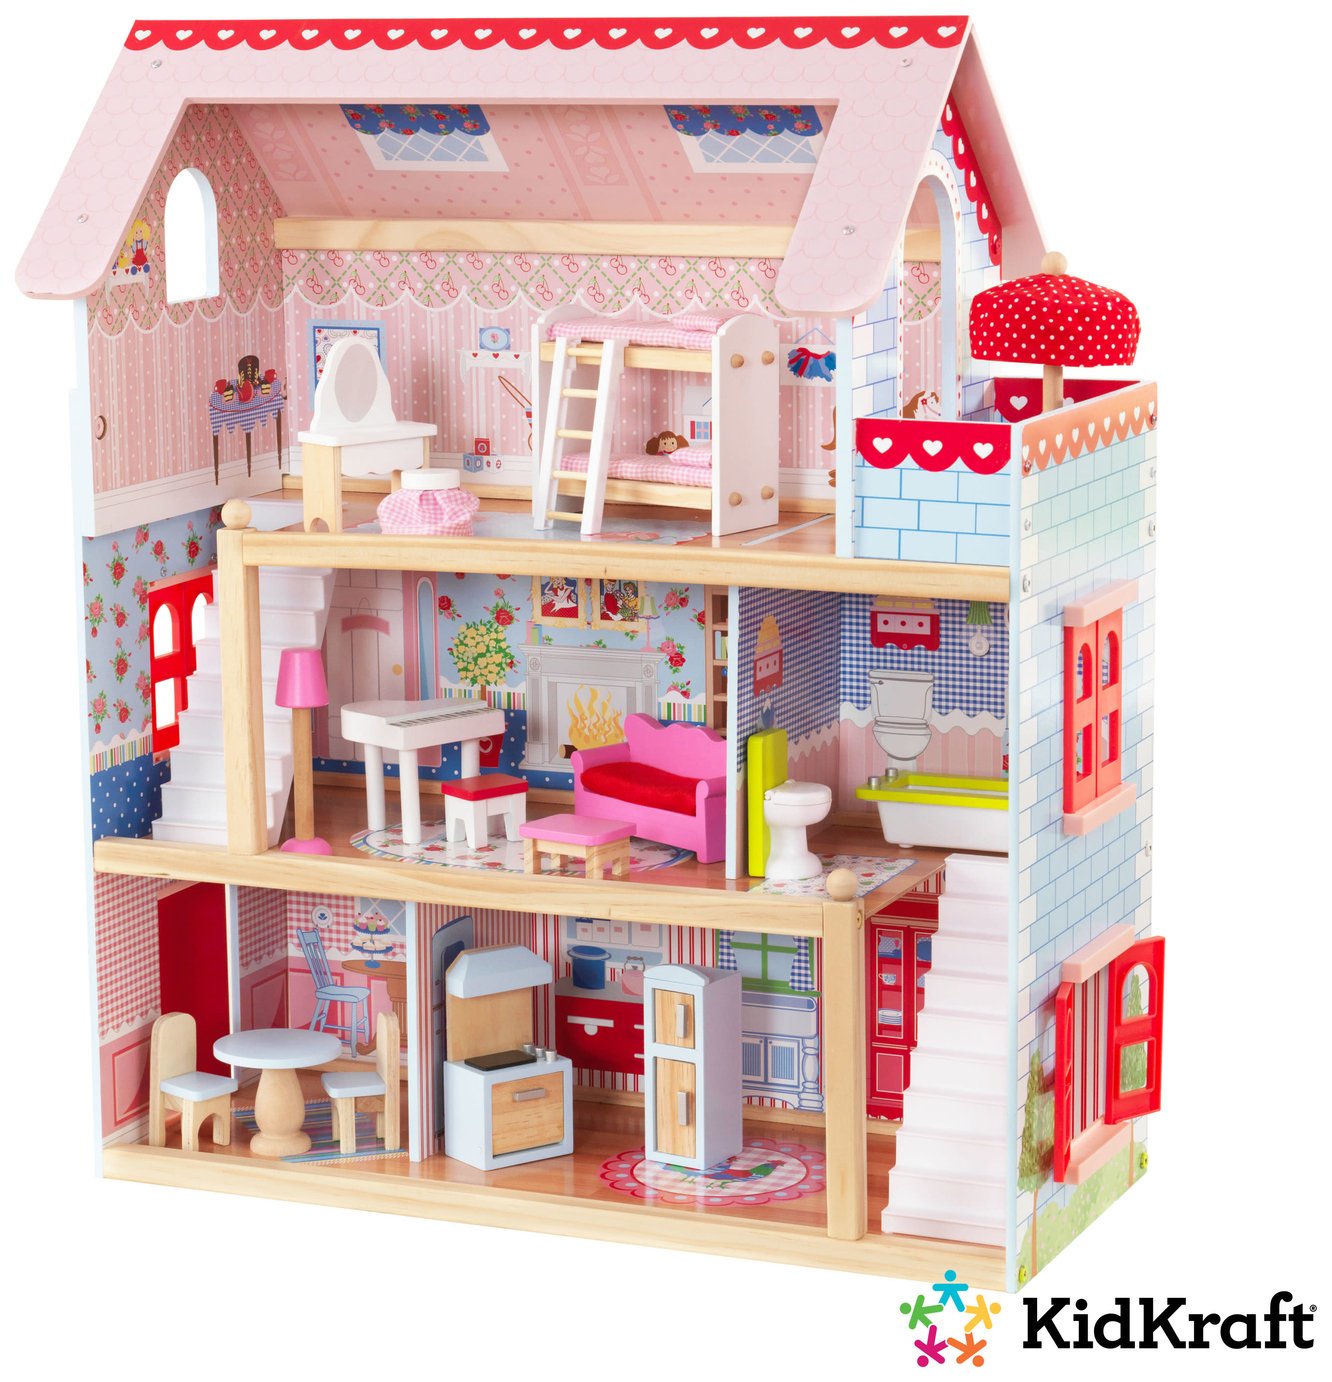 KidKraft Chelsea Doll Cottage Wooden Dolls House